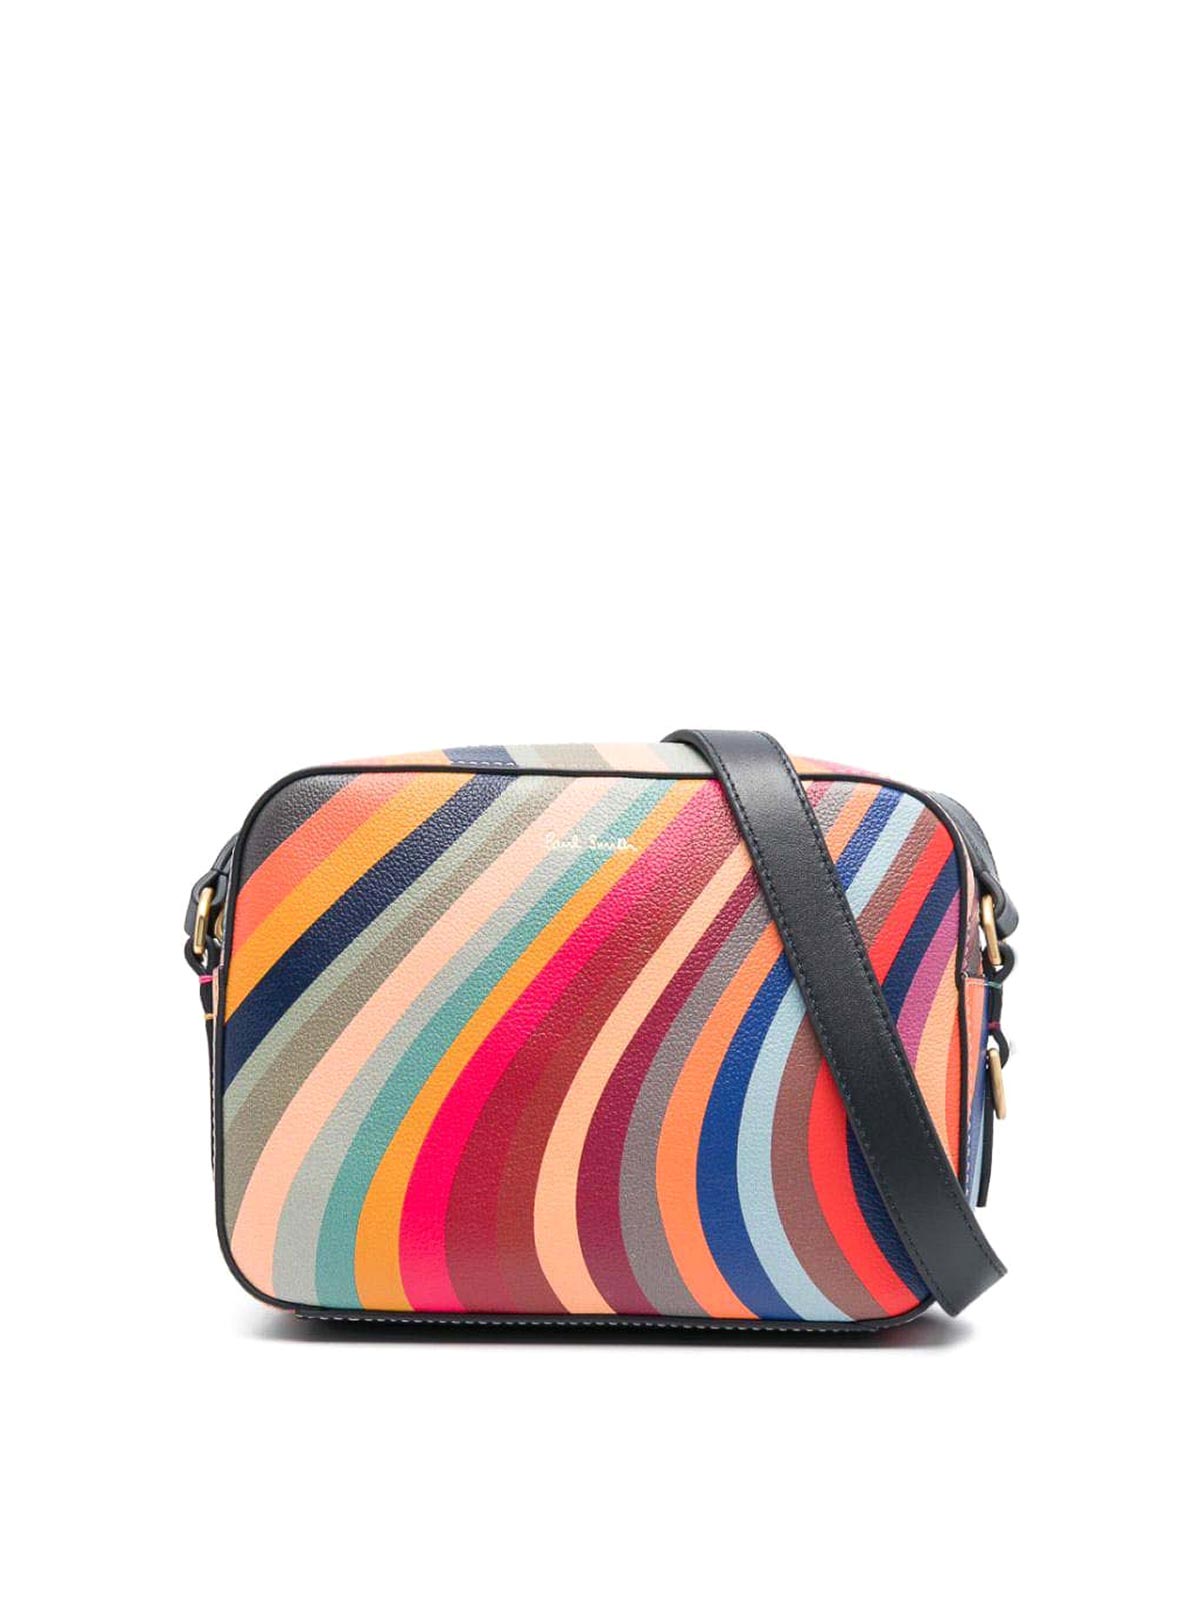 Paul Smith Swirl Print Leather Bucket Bag W1a-6345-dswirl-90 In Multicolour